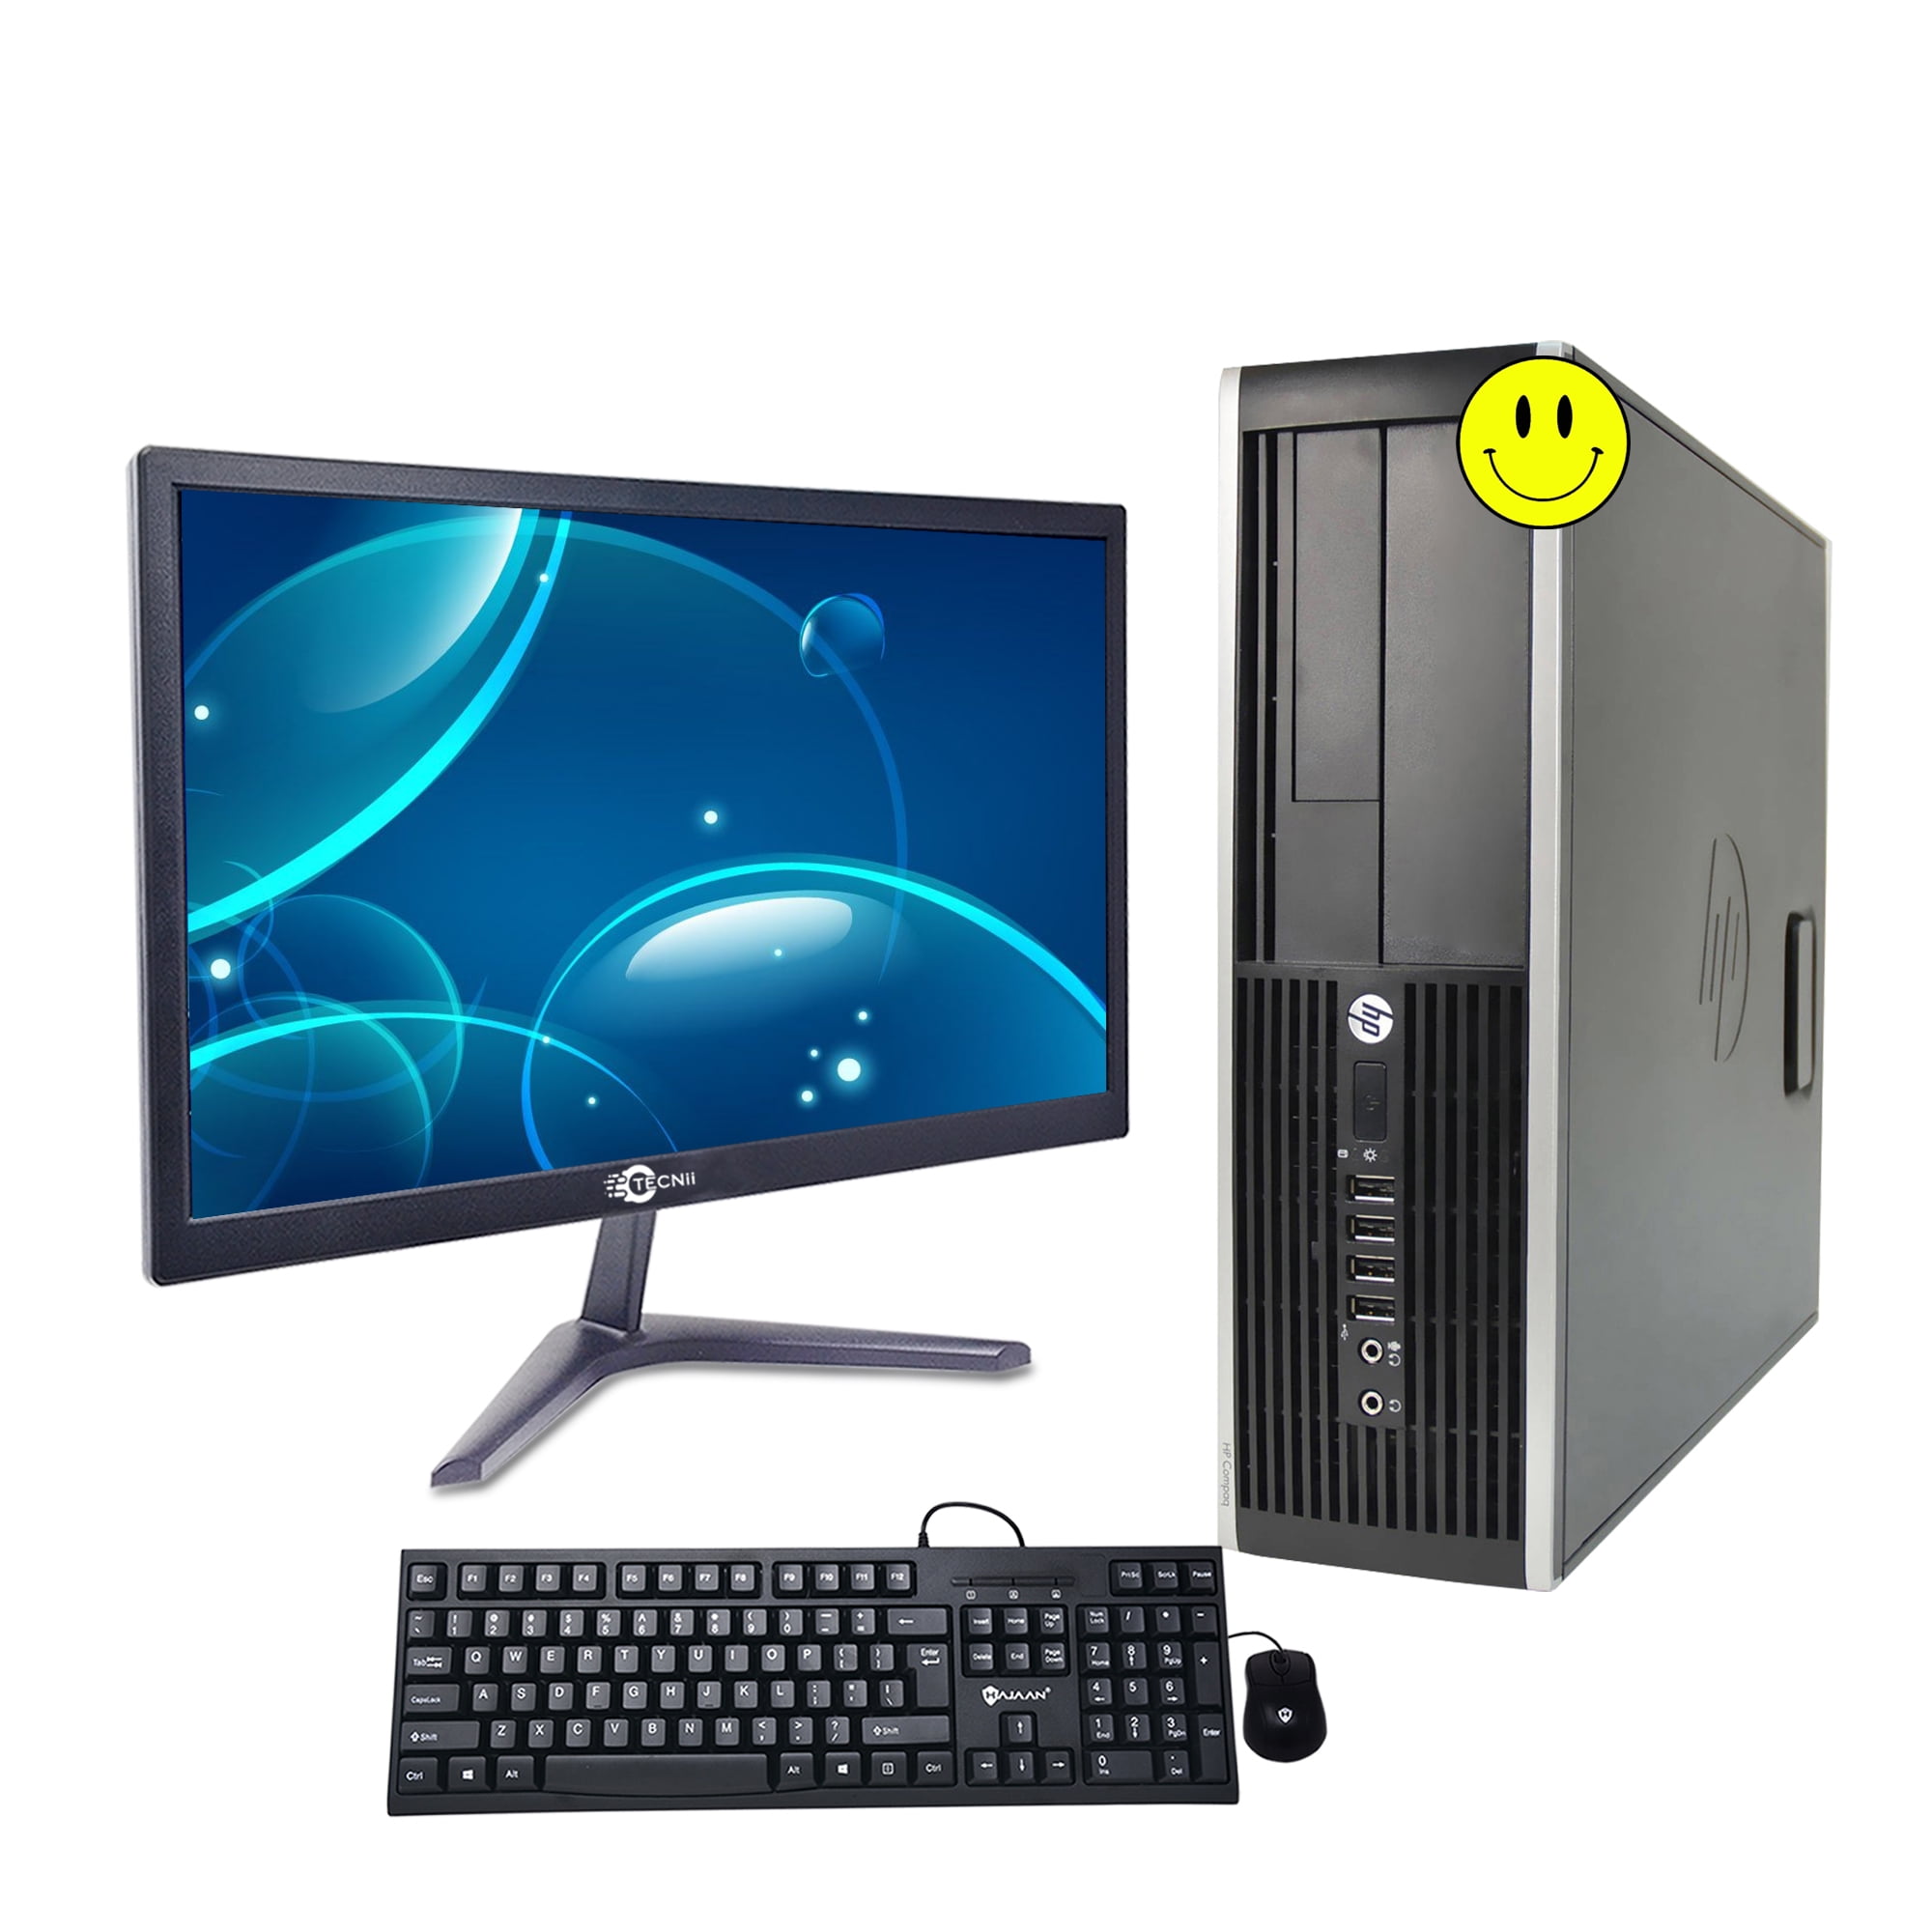 HP Compaq Pro 6300 SFF High performance Desktop with Tecnii